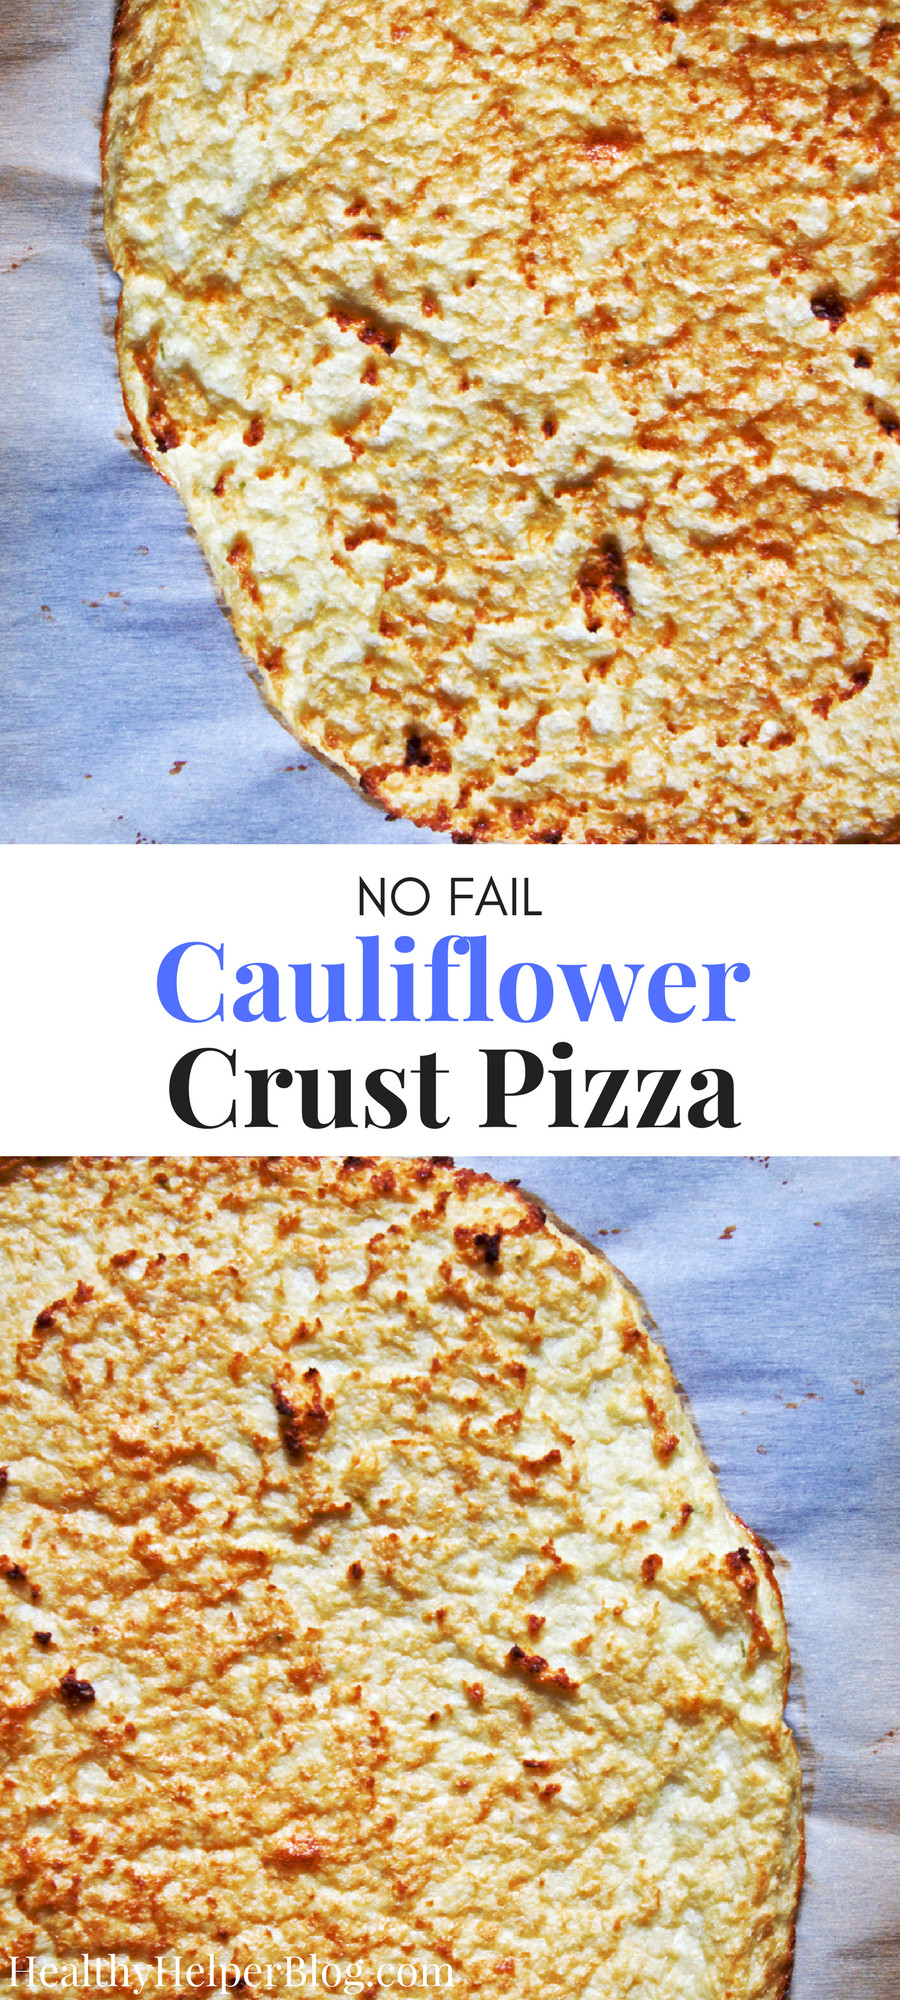 Where Can I Buy Cauliflower Pizza Crust
 NO FAIL Cauliflower Crust Pizza [gluten free grain free